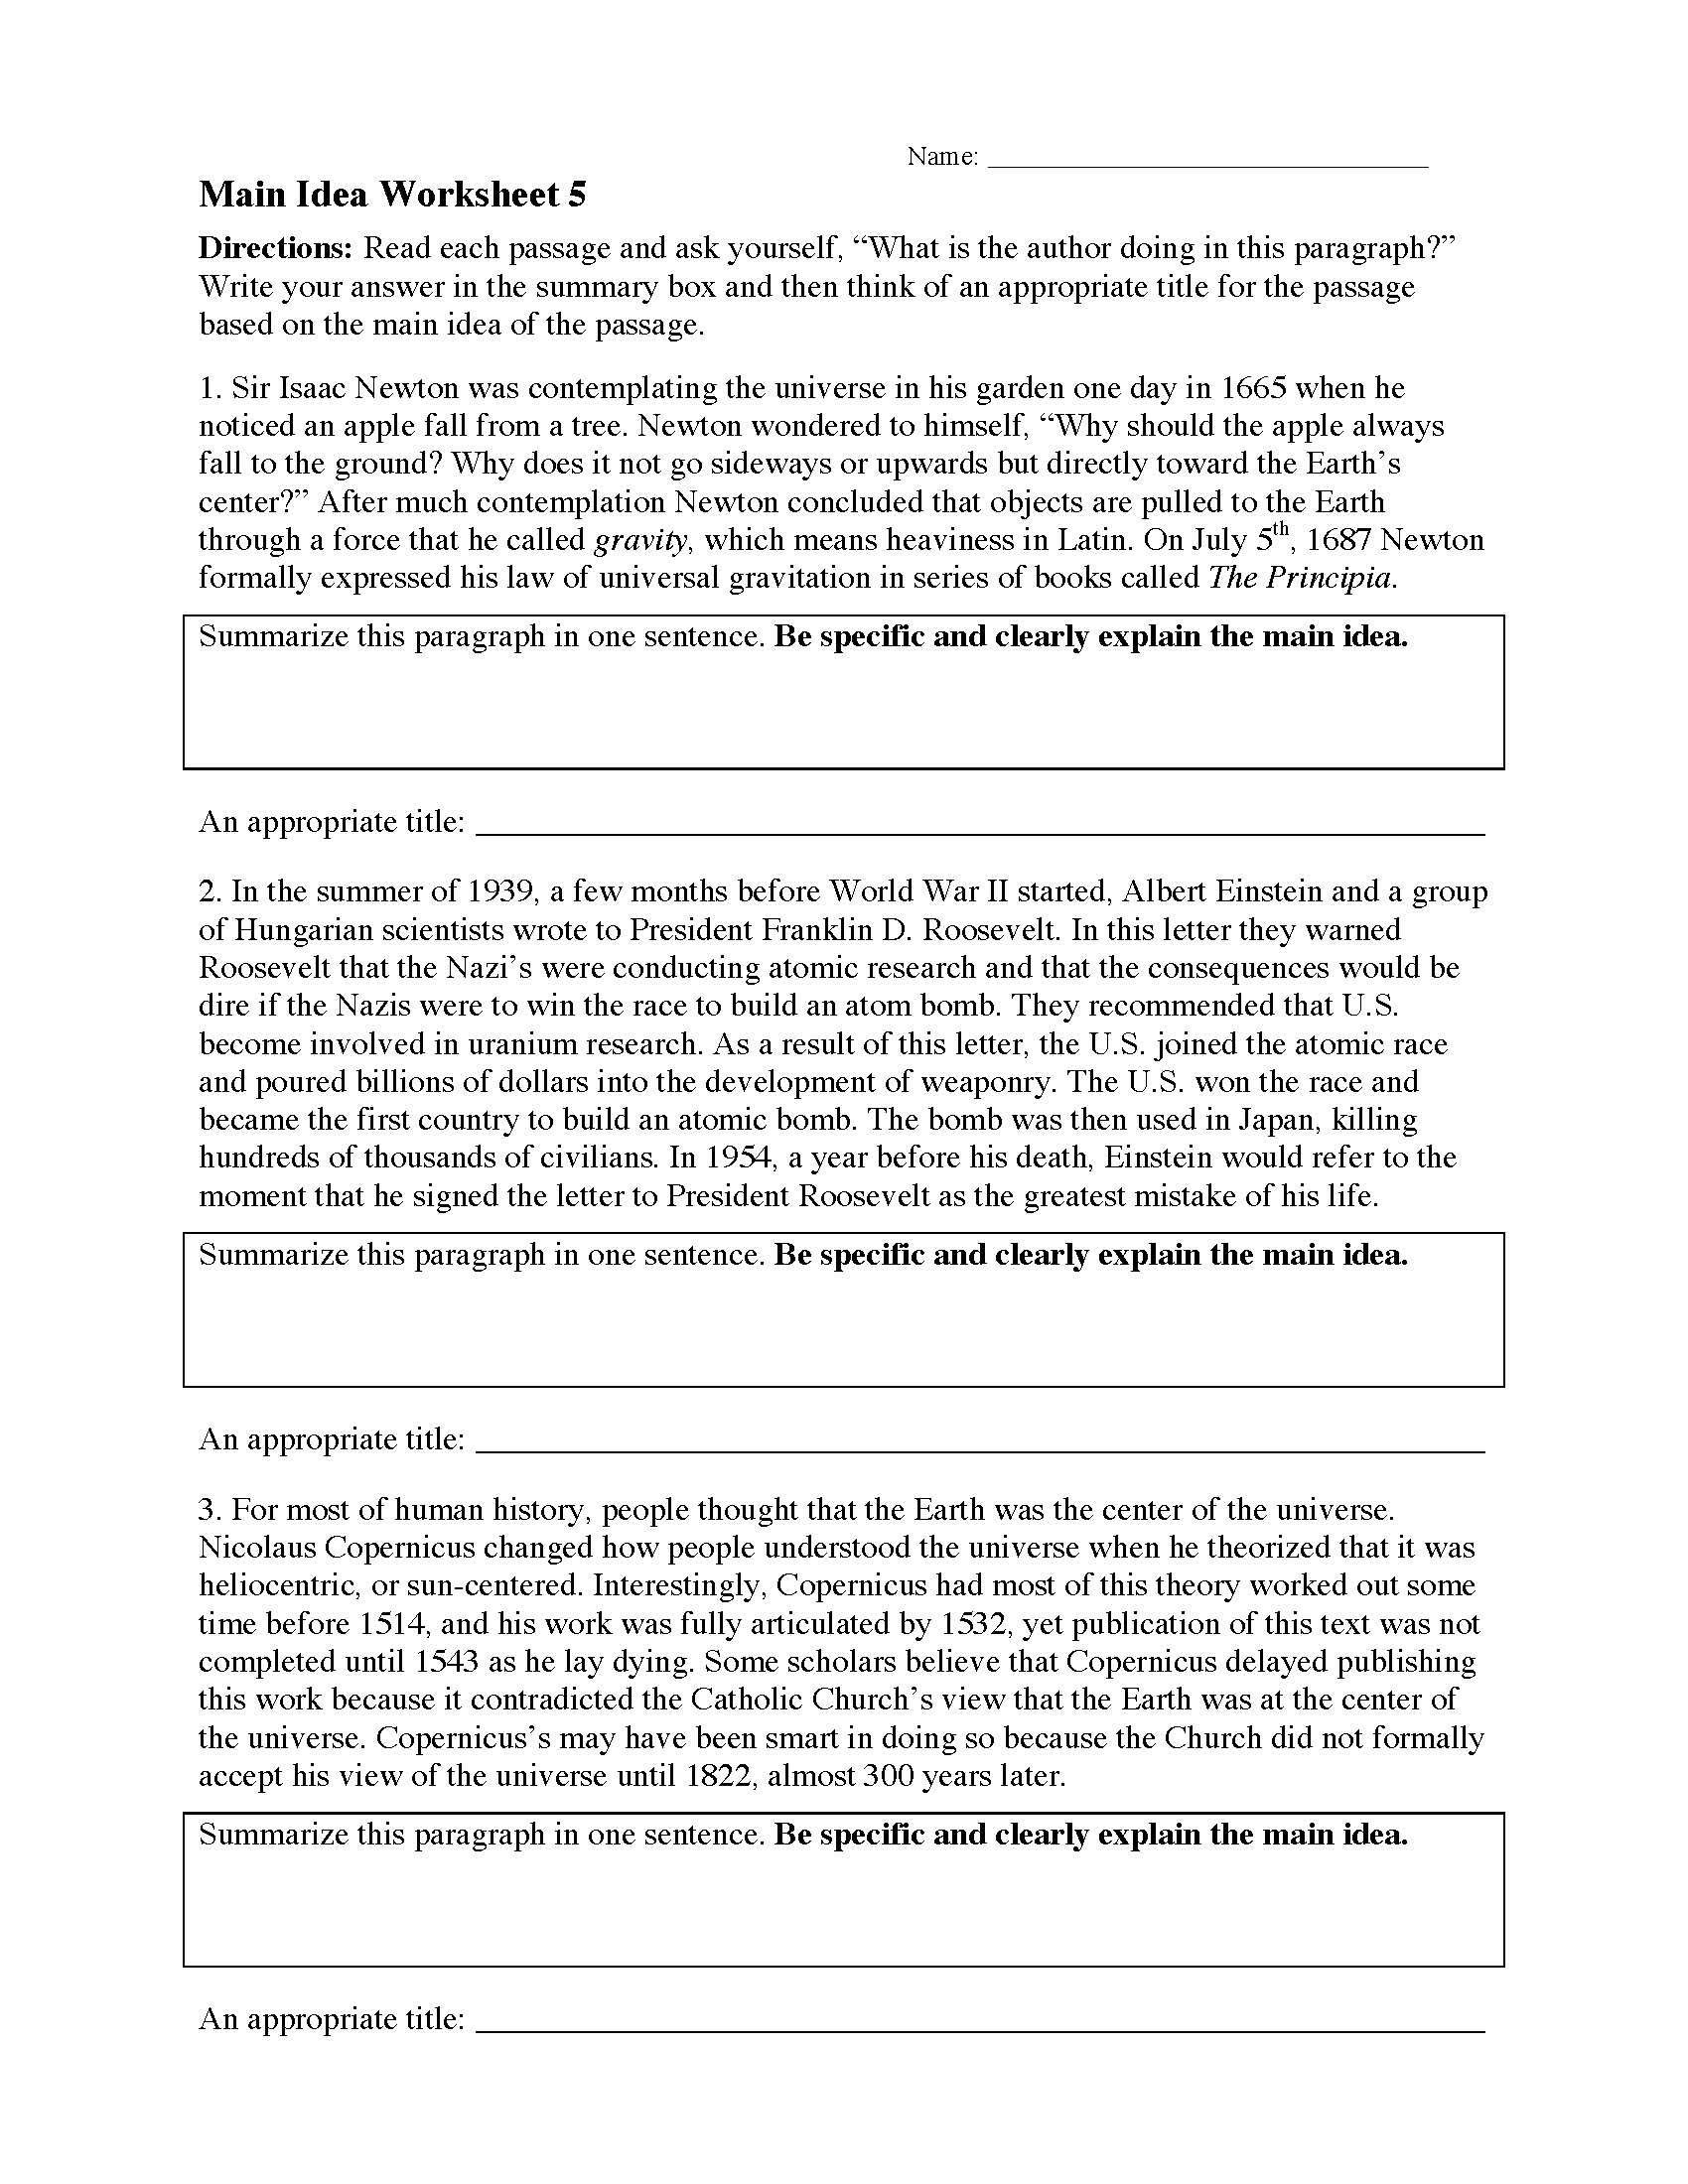 Main Idea Worksheet 4  Reading Activity In Main Idea Worksheet 5